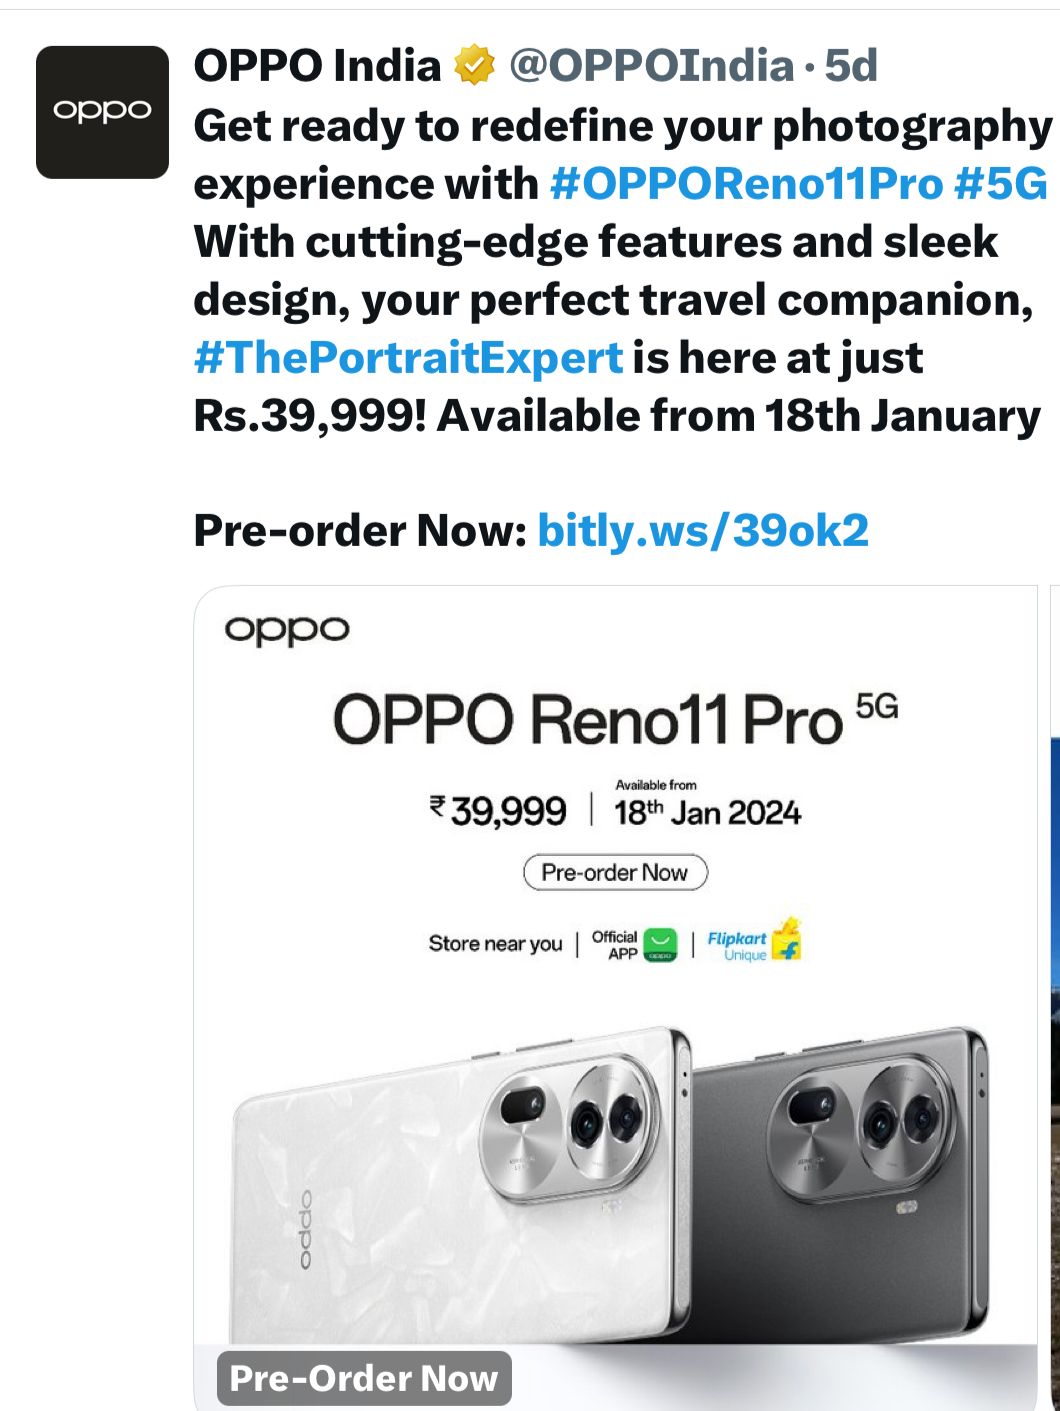 OPPO Reno11 Pro 5G: Key Specifications